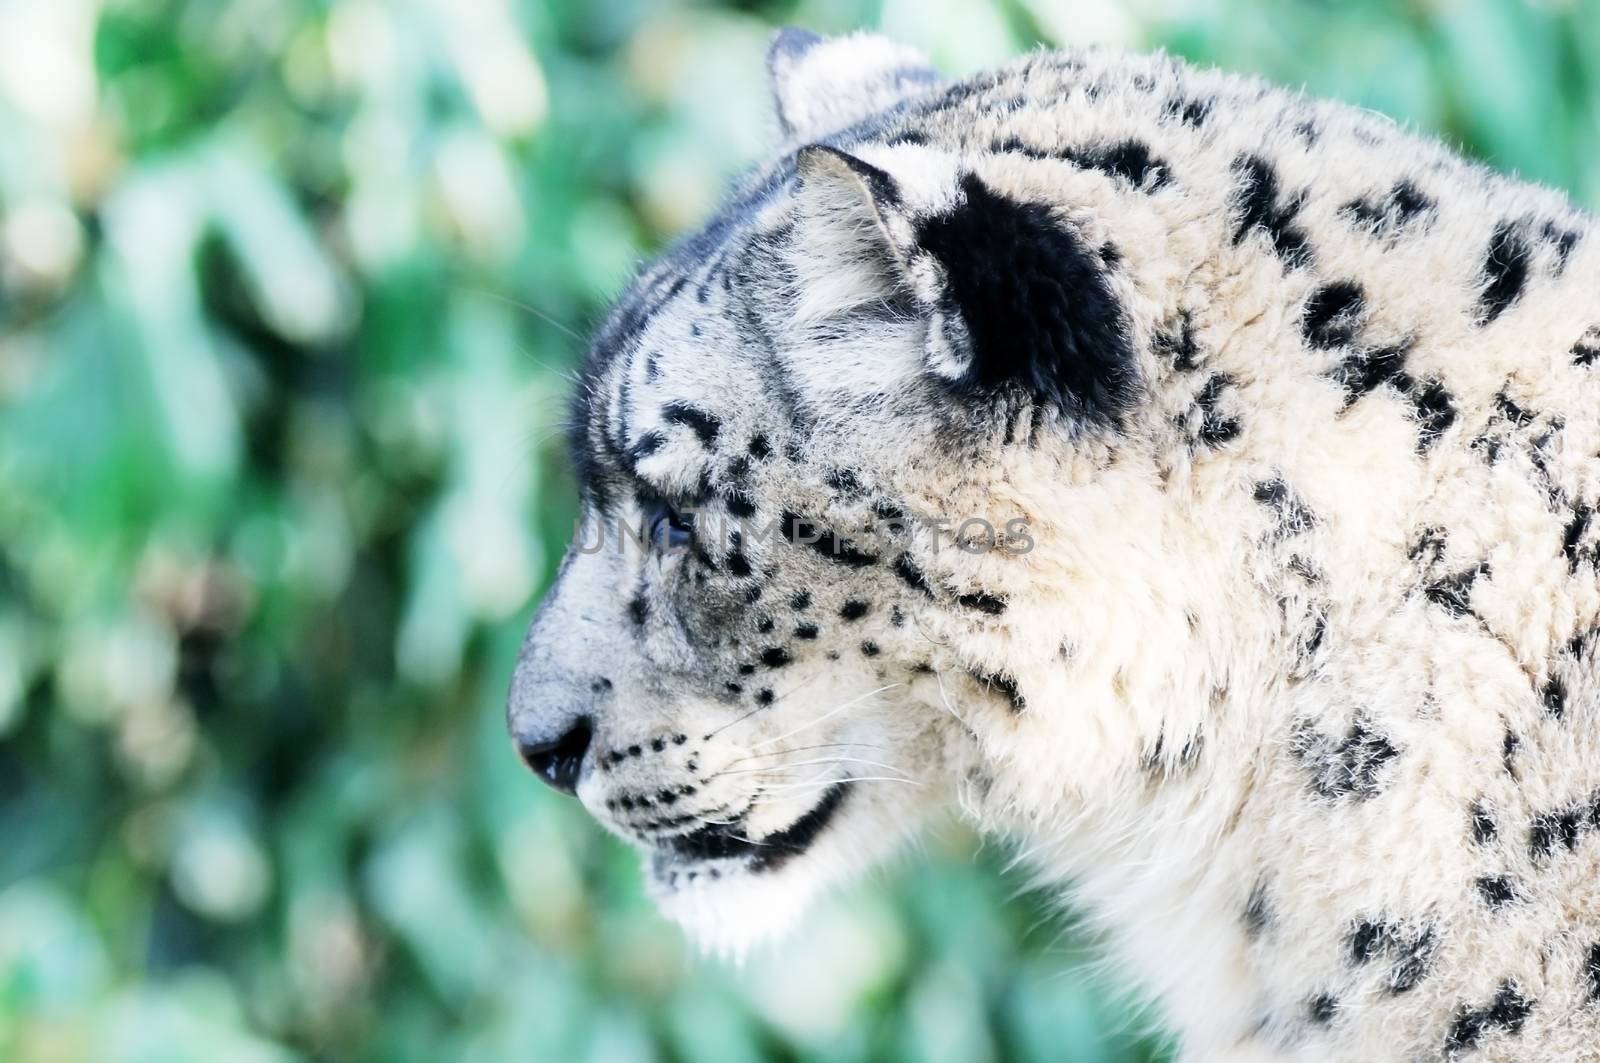 Closeup of snow leopard head in profile showing spotty fur